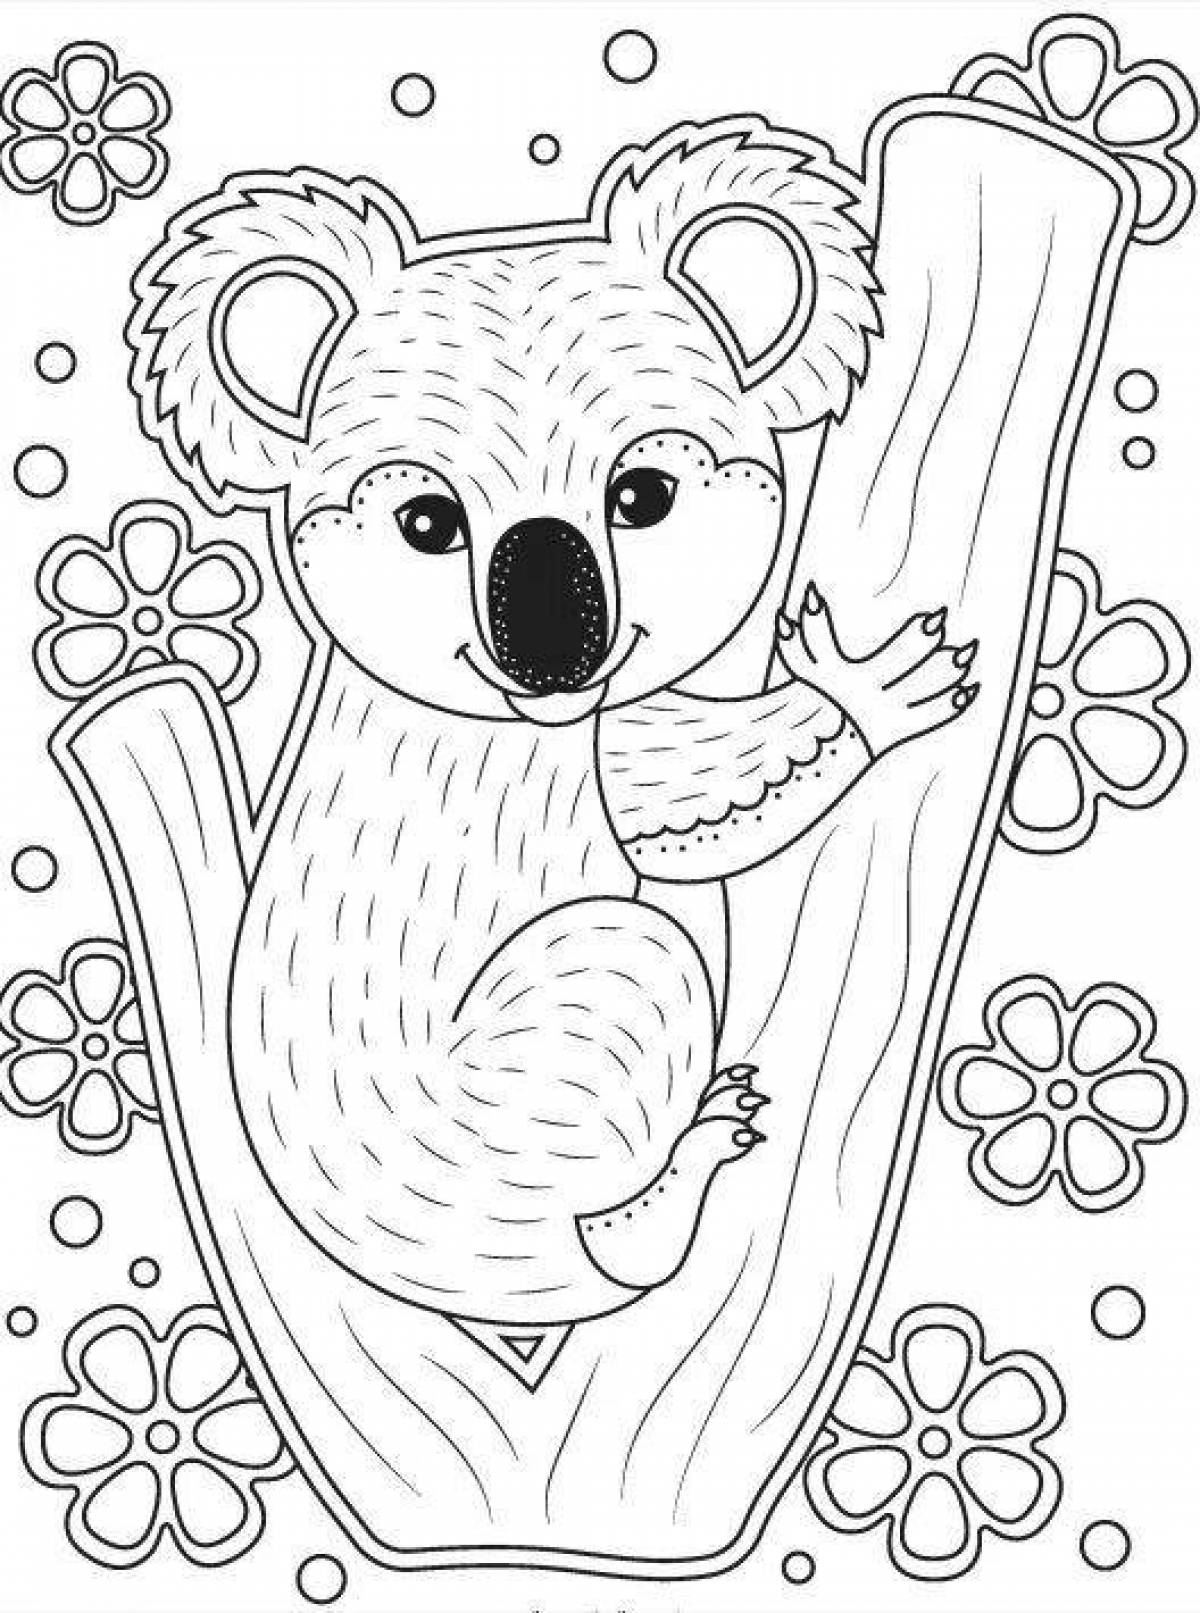 Koala fun coloring book for kids